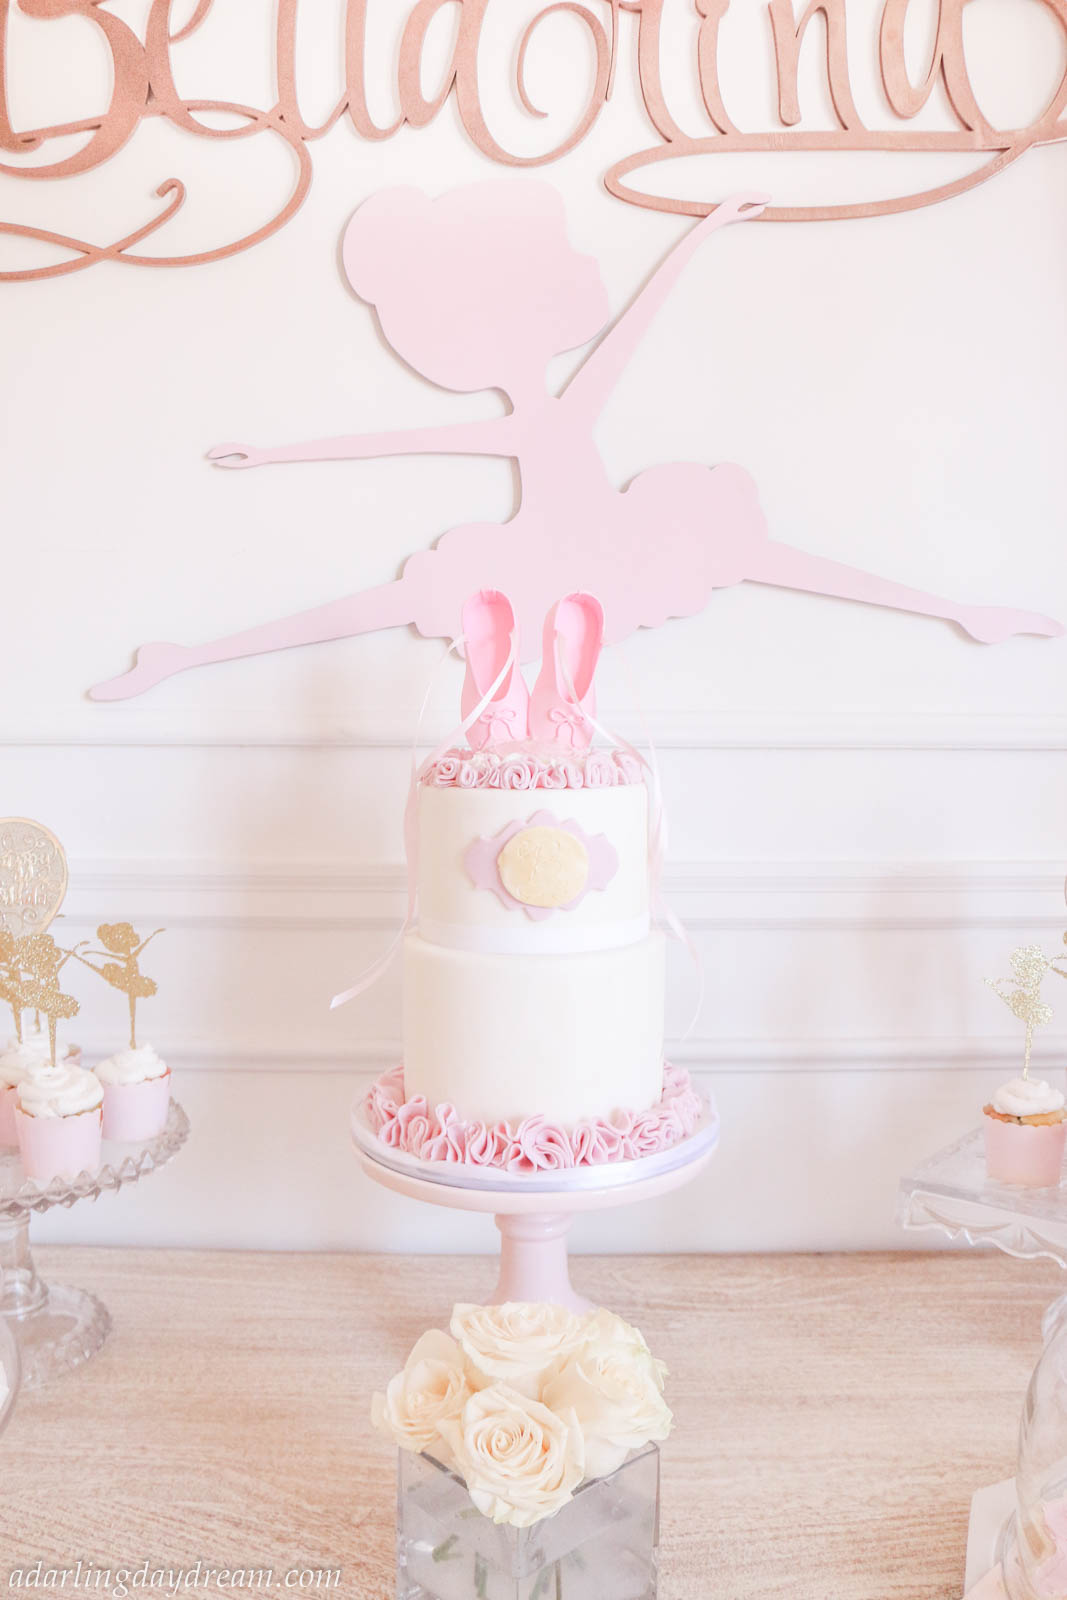 Bella-s-forth-birthday-party-ballerina-unicorn-60